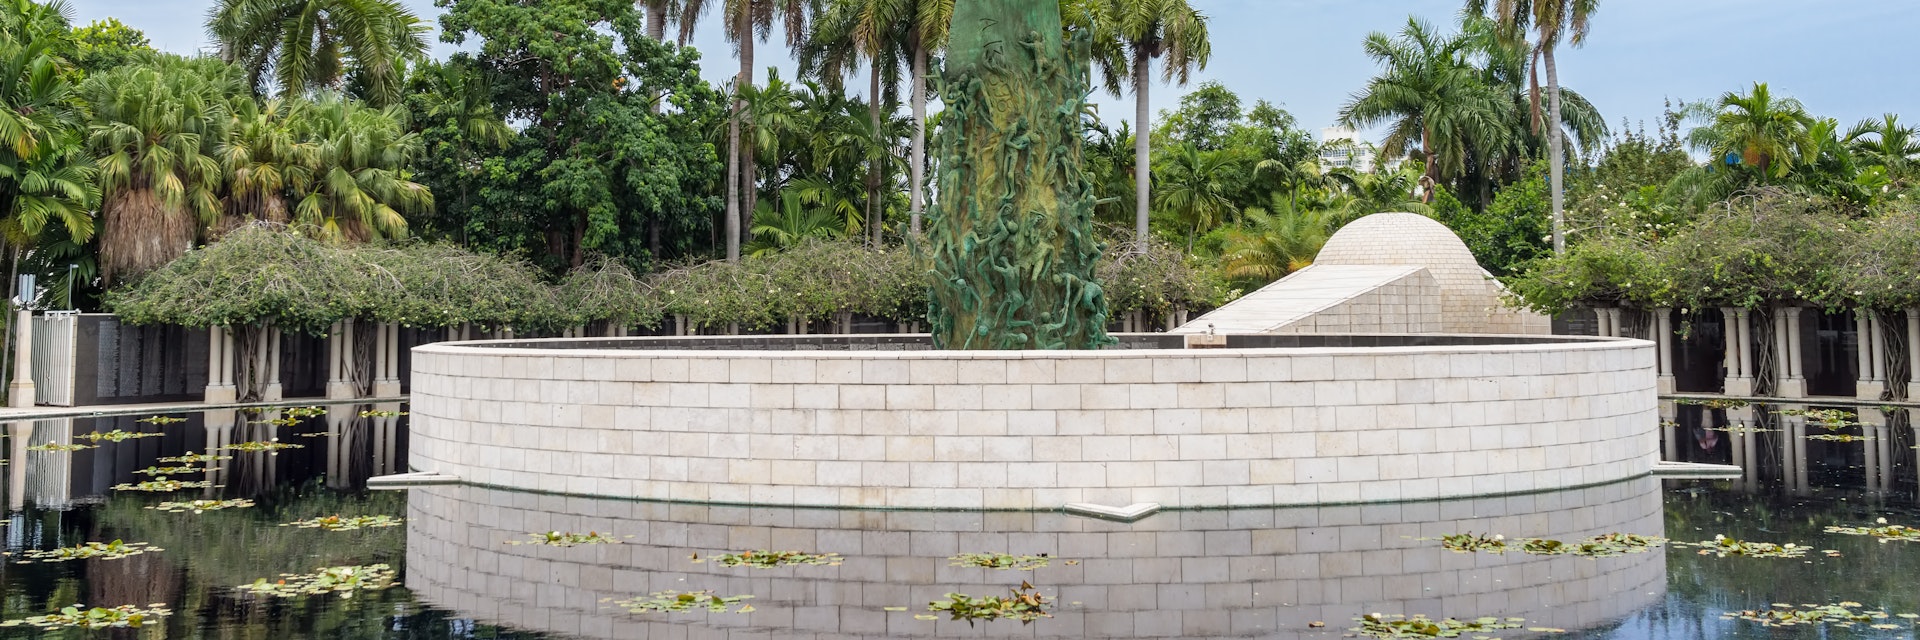 The Holocaust Memorial on Miami Beach.